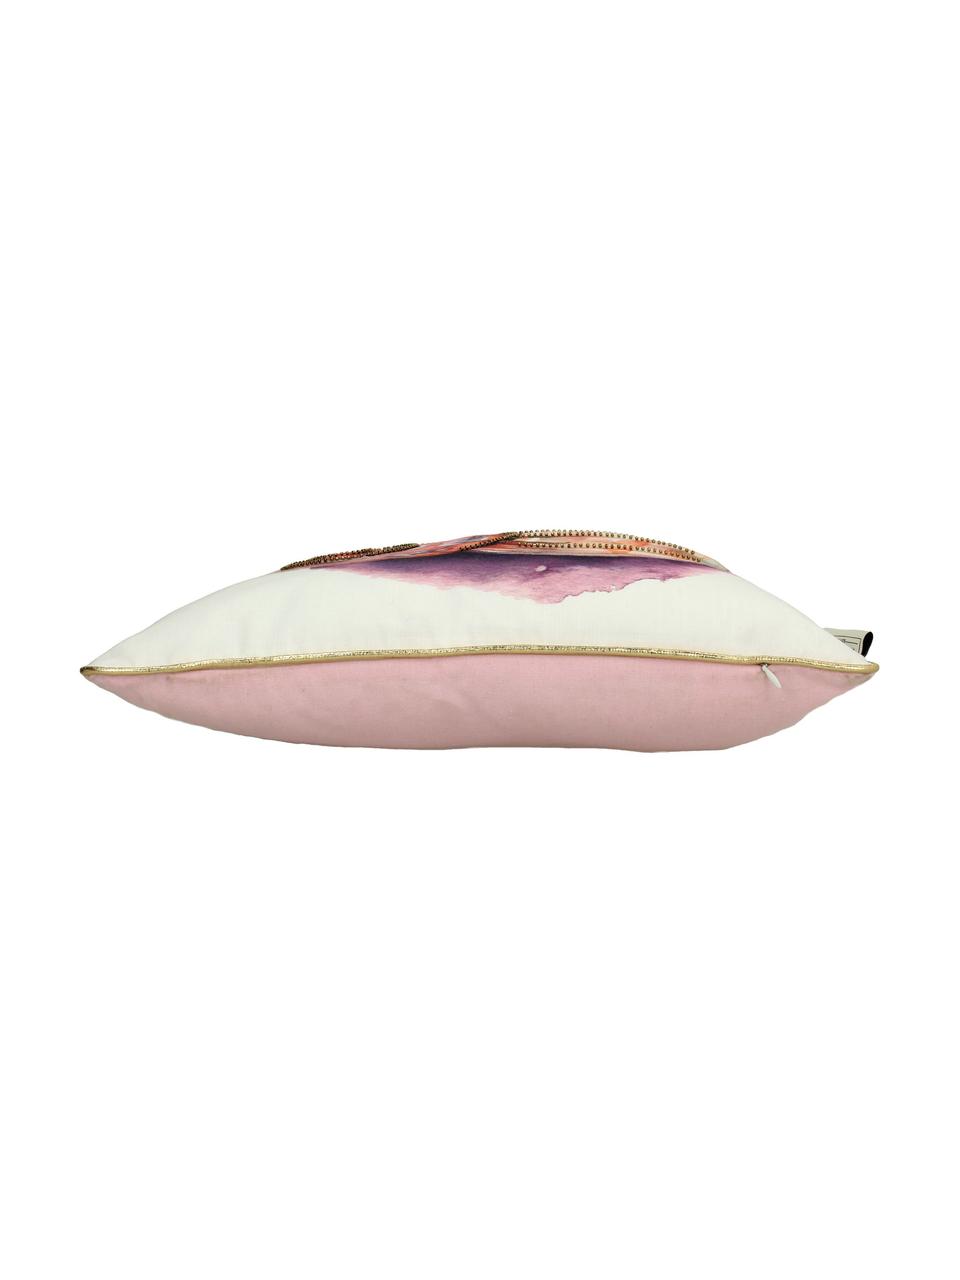 Cojín con abalorios Snail, con relleno, Beige, multicolor, An 45 x L 45 cm